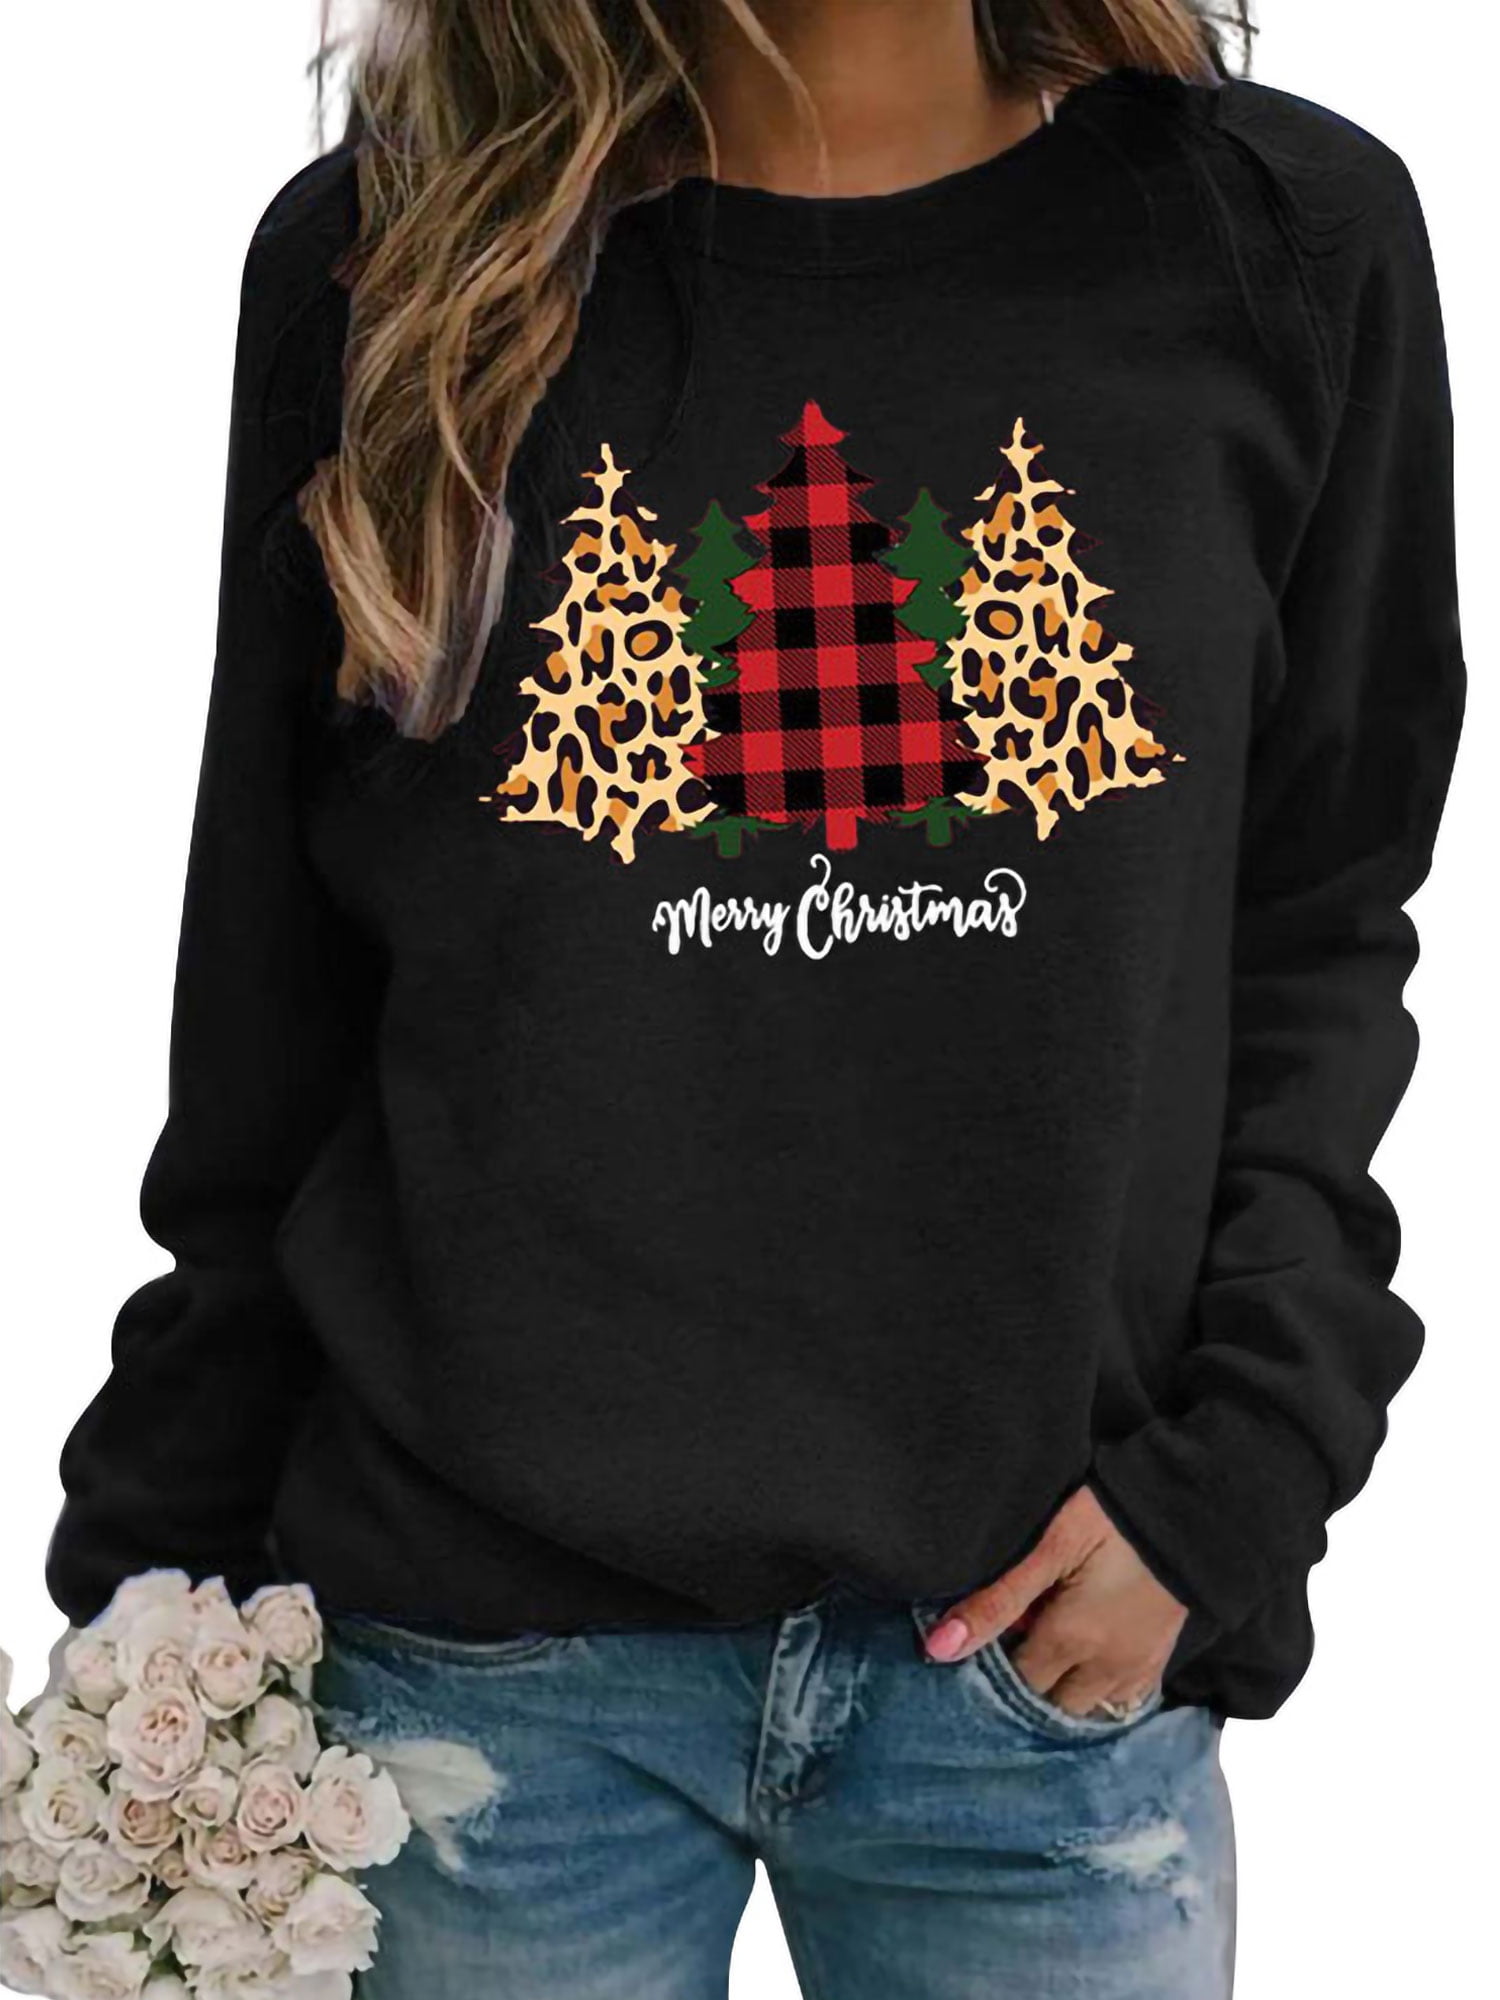 Womens Christmas Sweatshirt Merry Christmas Tree Graphic Tops Cute Joy Santa Funny Wine Glasses Shirts Tops Blouse